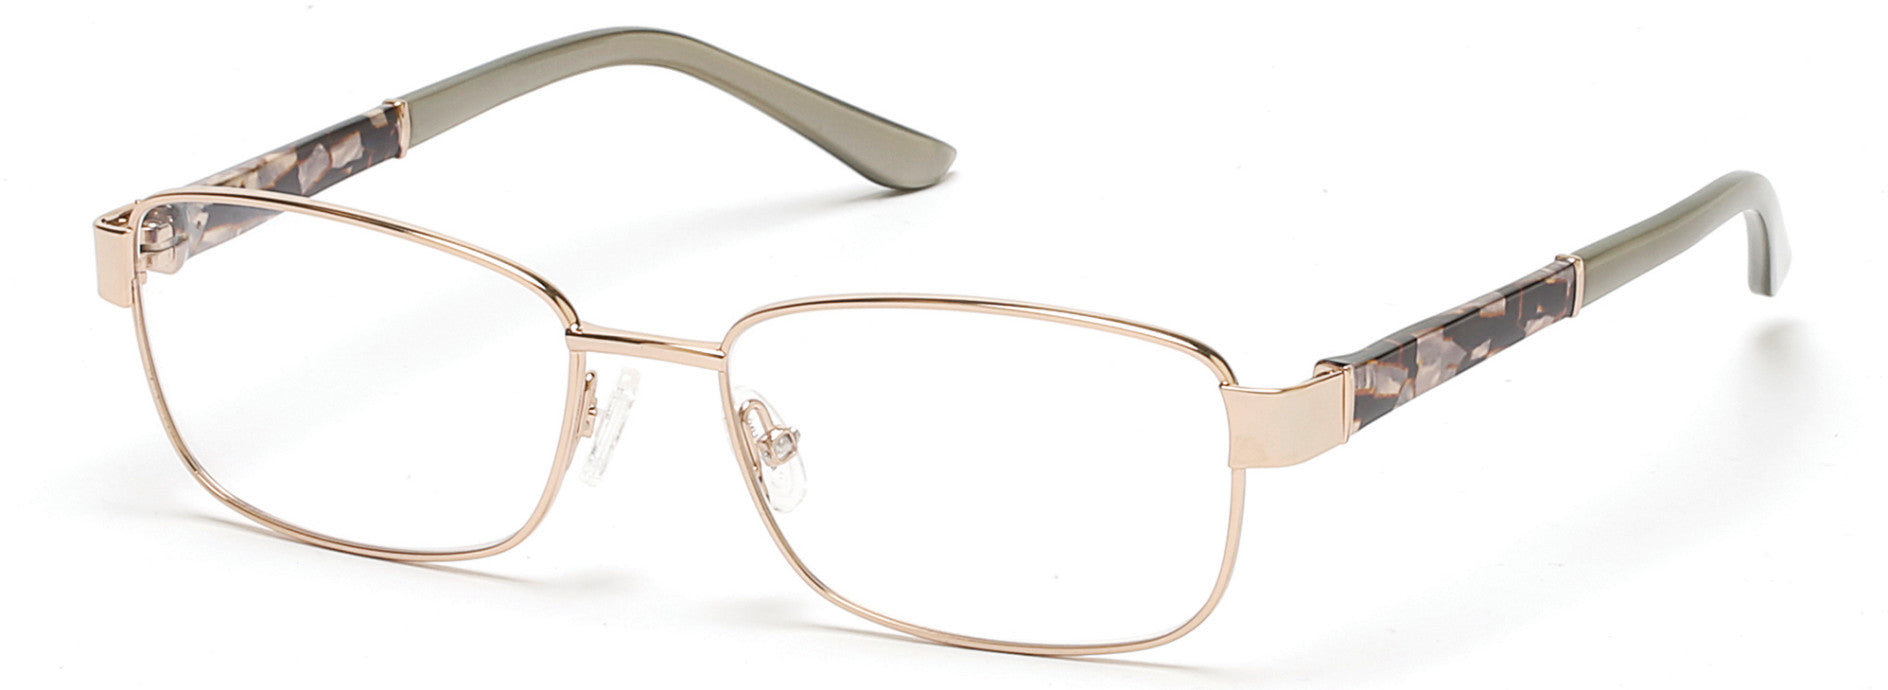 Marcolin MA5007 Eyeglasses 032-032 - Pale Gold